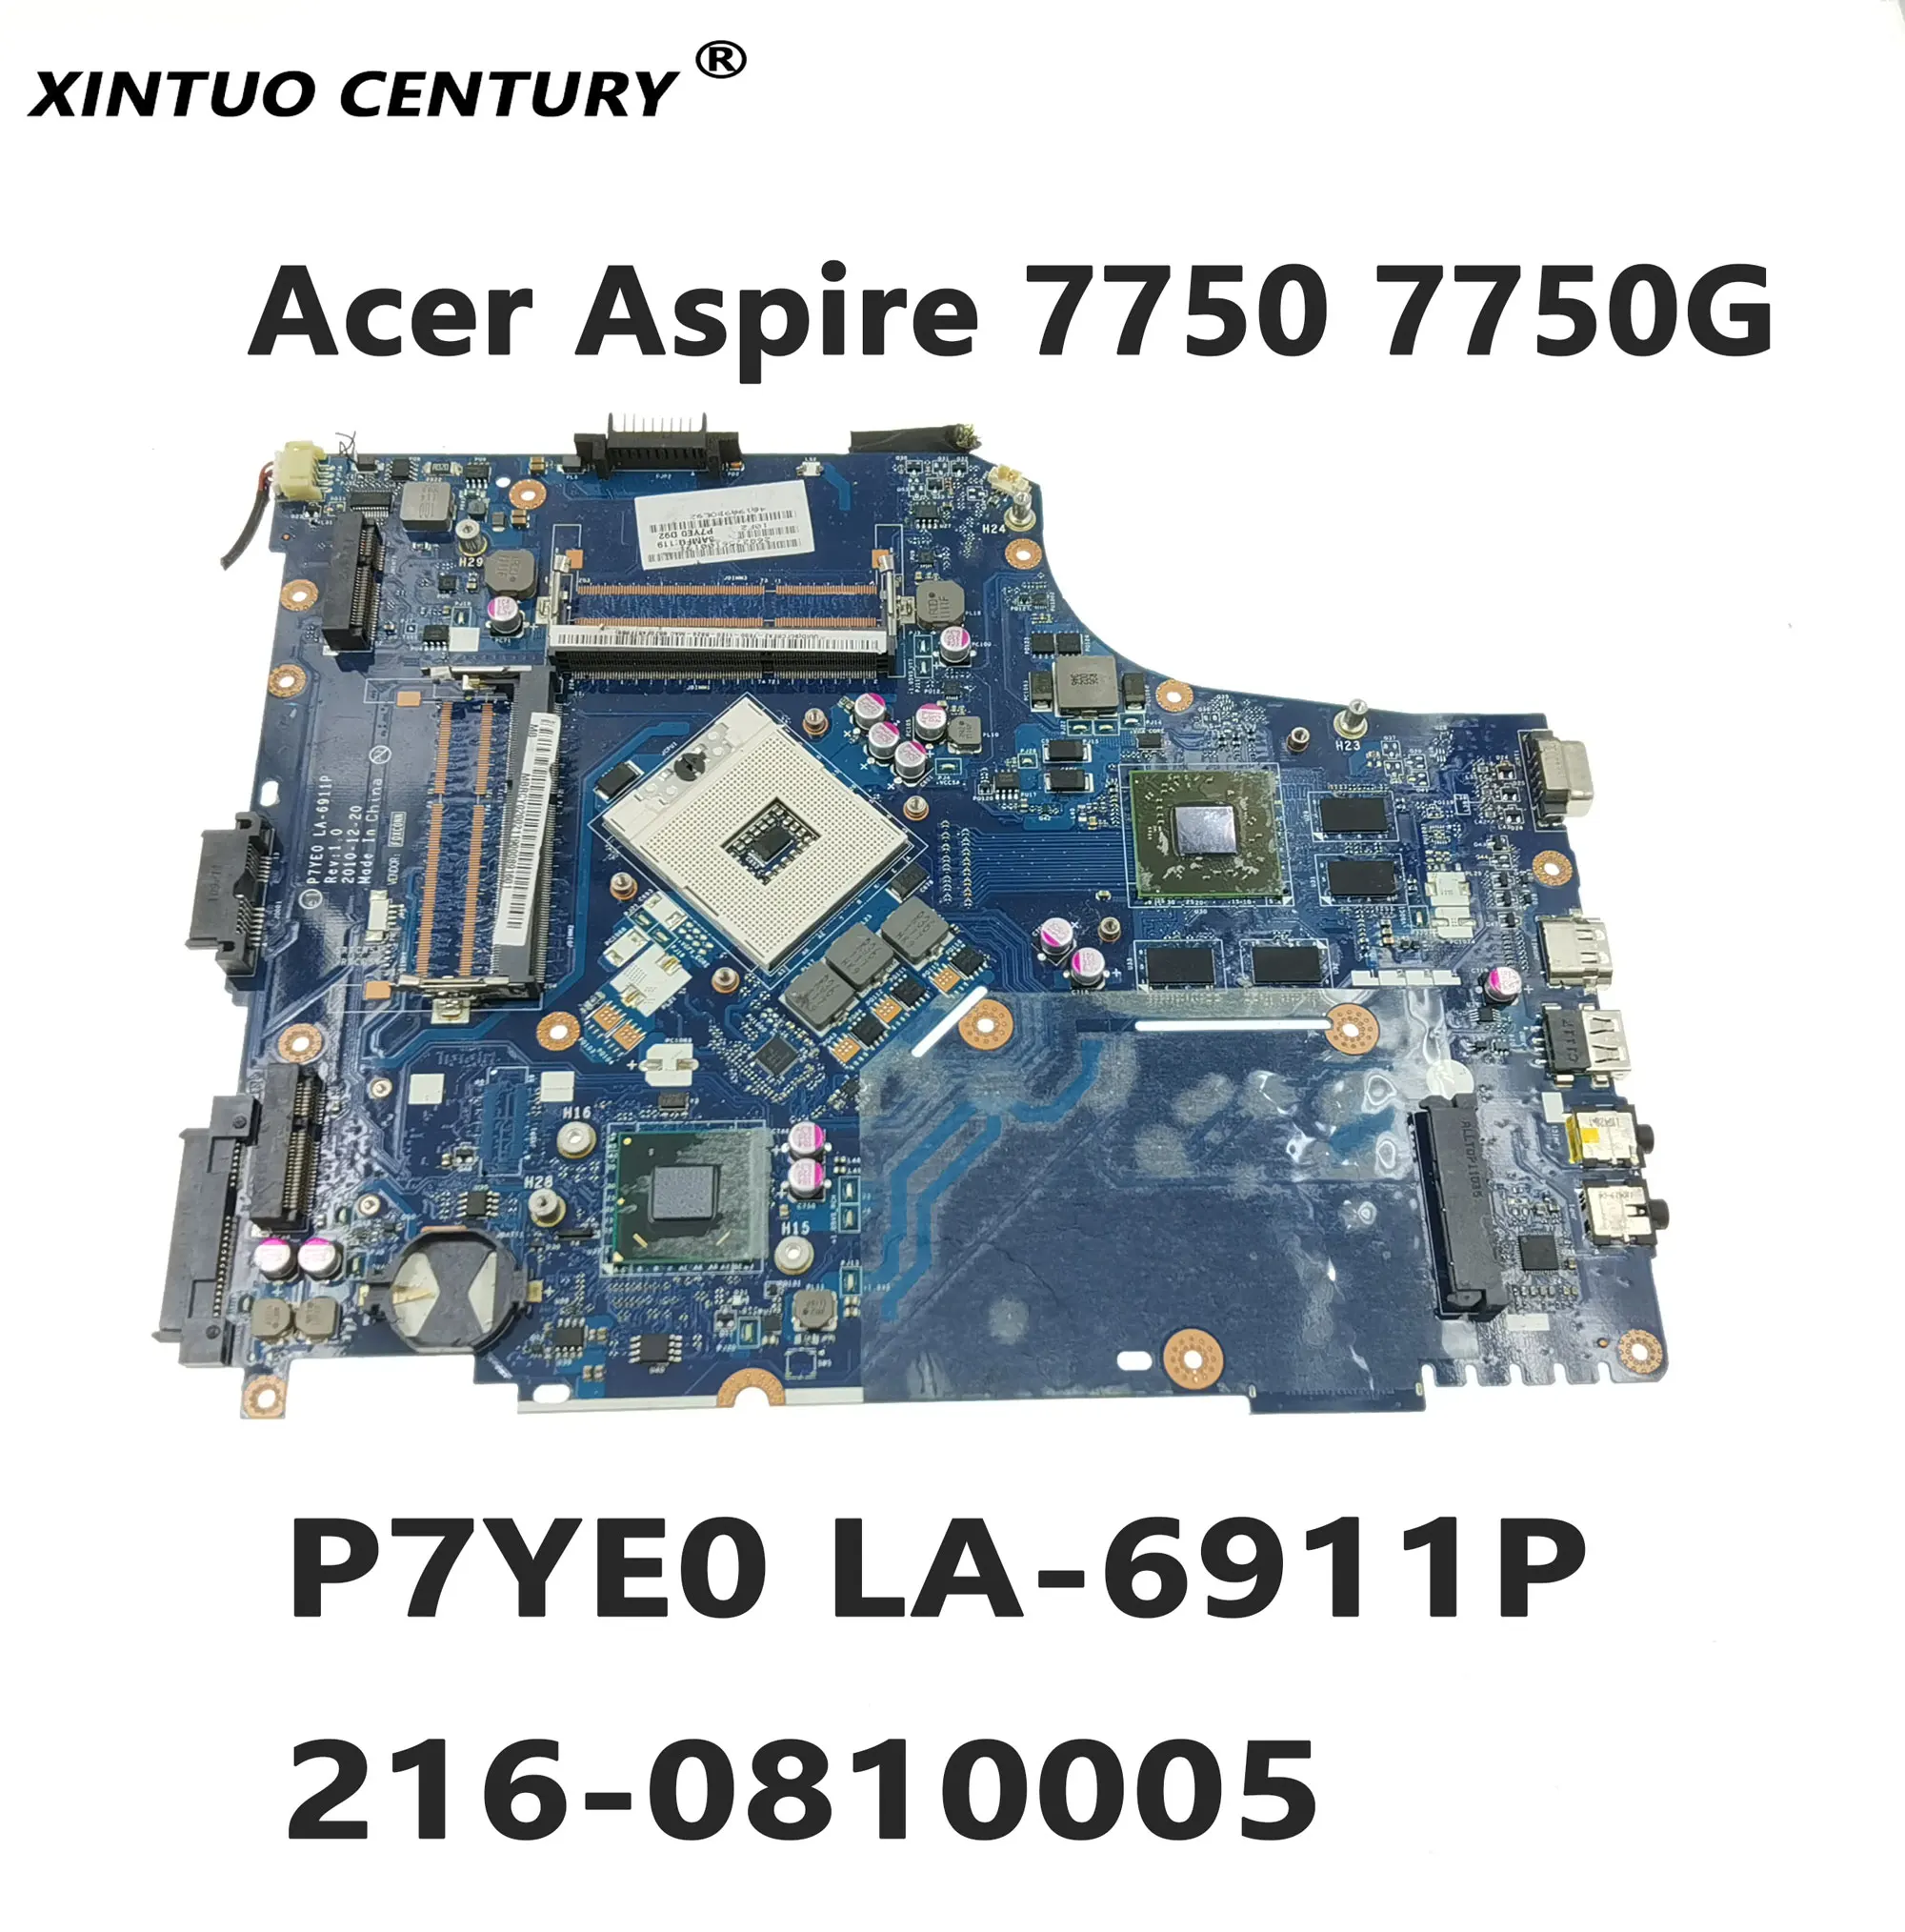 

MBRMK02001 MB.RMK02.001 Motherboard for Acer ASPIRE 7750 7750G Laptop Motherboard P7YE0 LA-6911P with 216-0810005 DDR3 100% Test